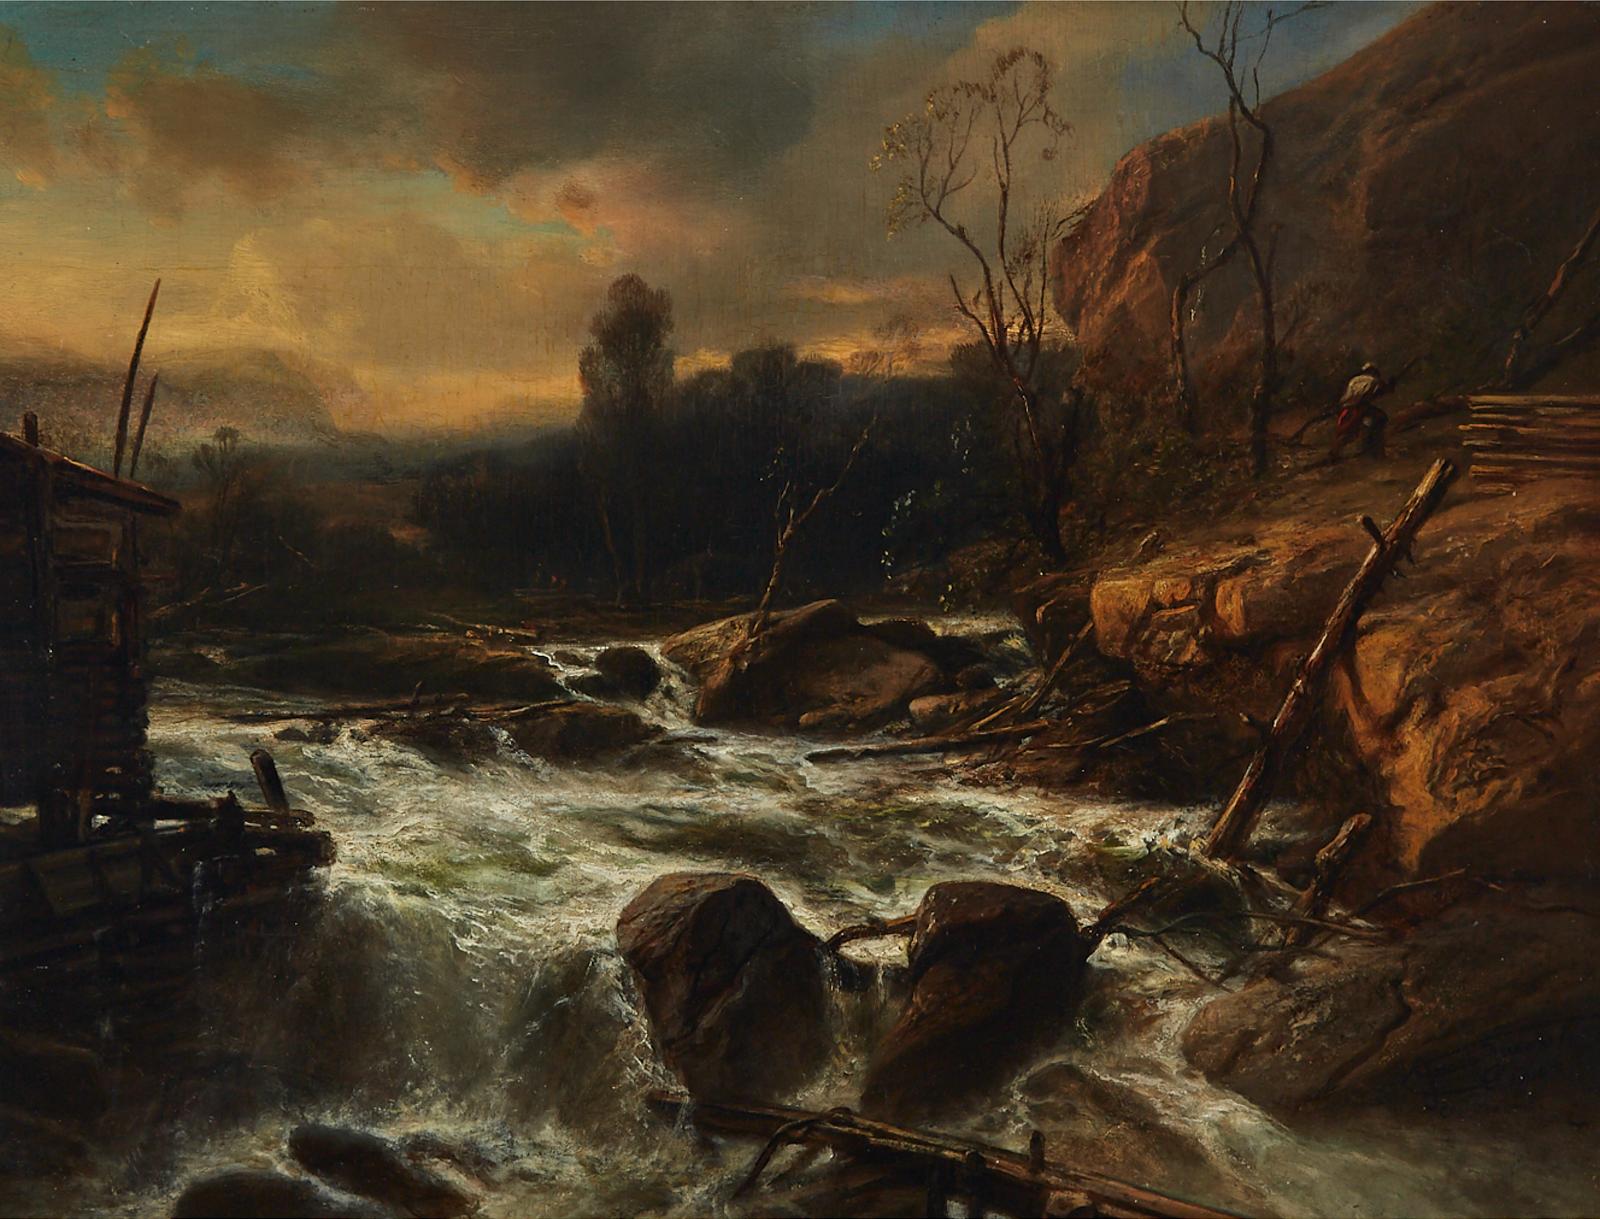 Jacob Jacobs (1812-1879) - The Broken Dam, 1860